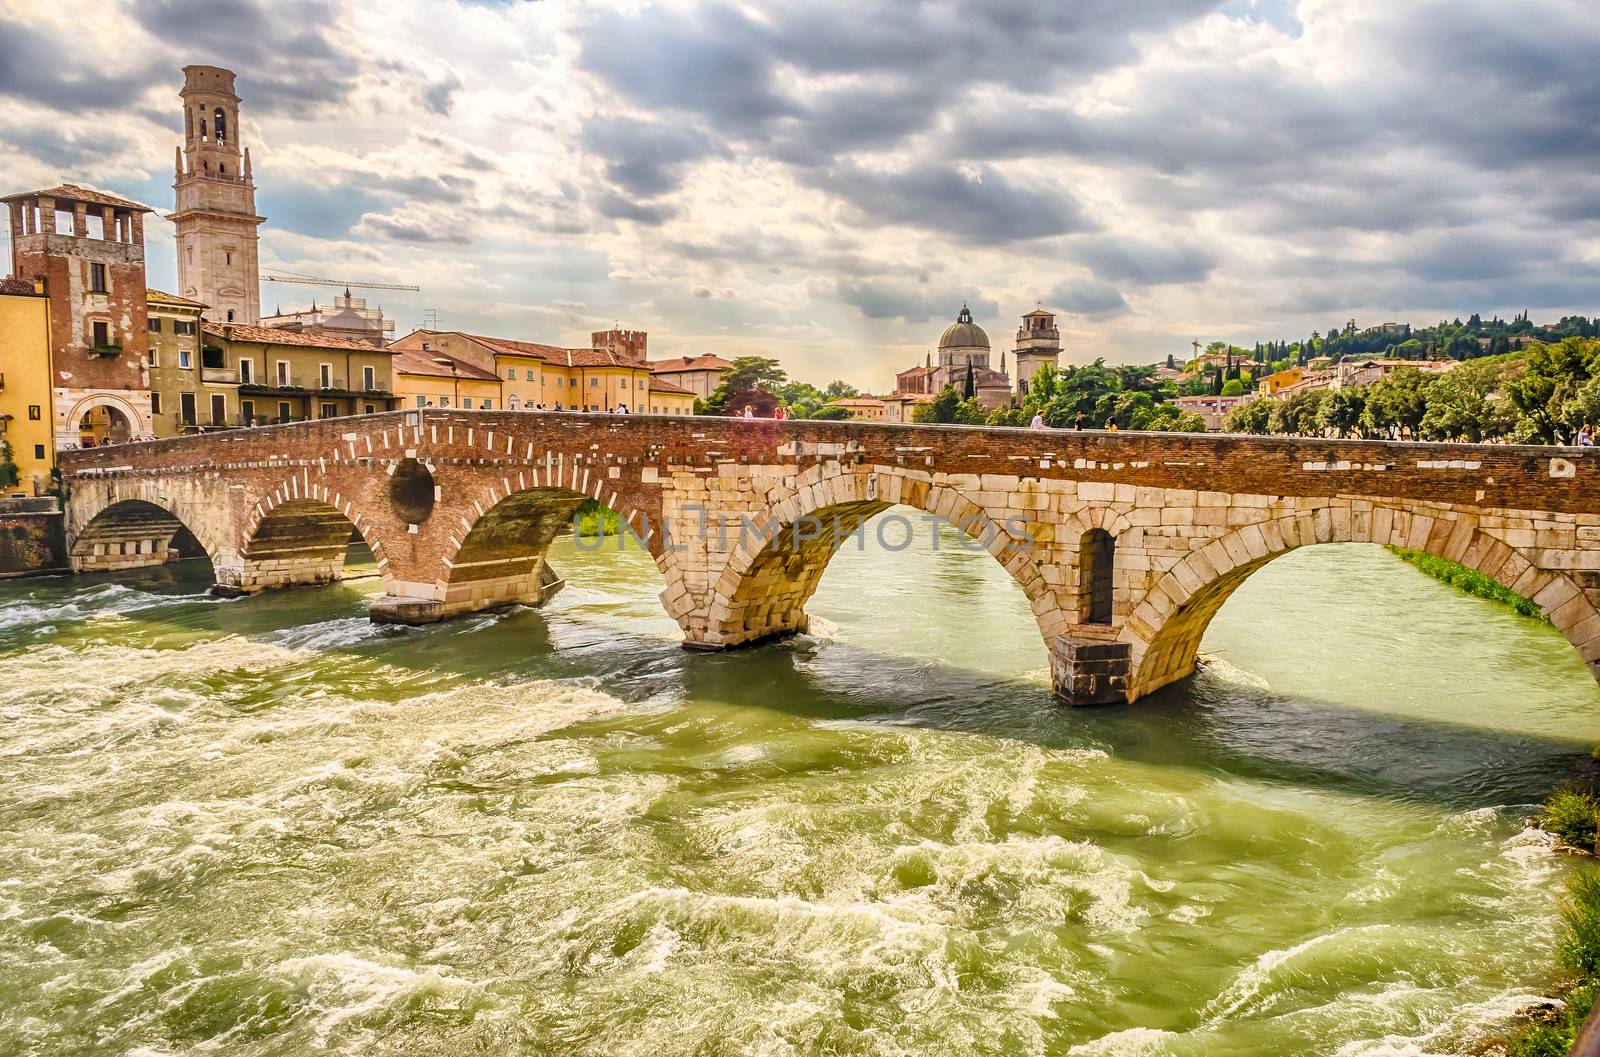 Ancient Roman Bridge called Ponte di Pietra above the Adige River in Verona, Italy